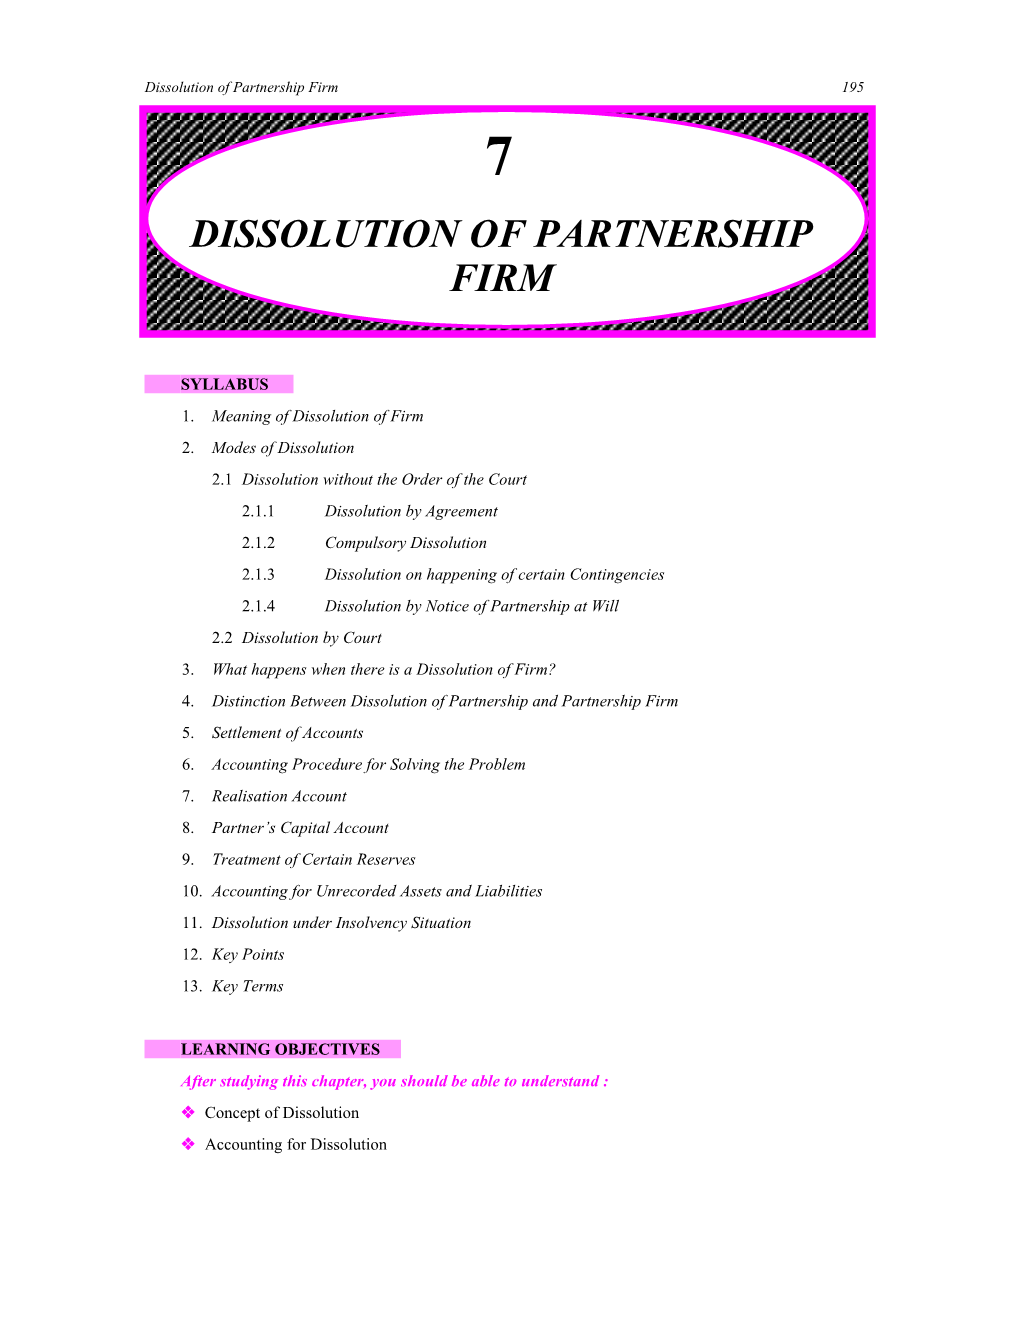 Dissolution of Partnership Firm1